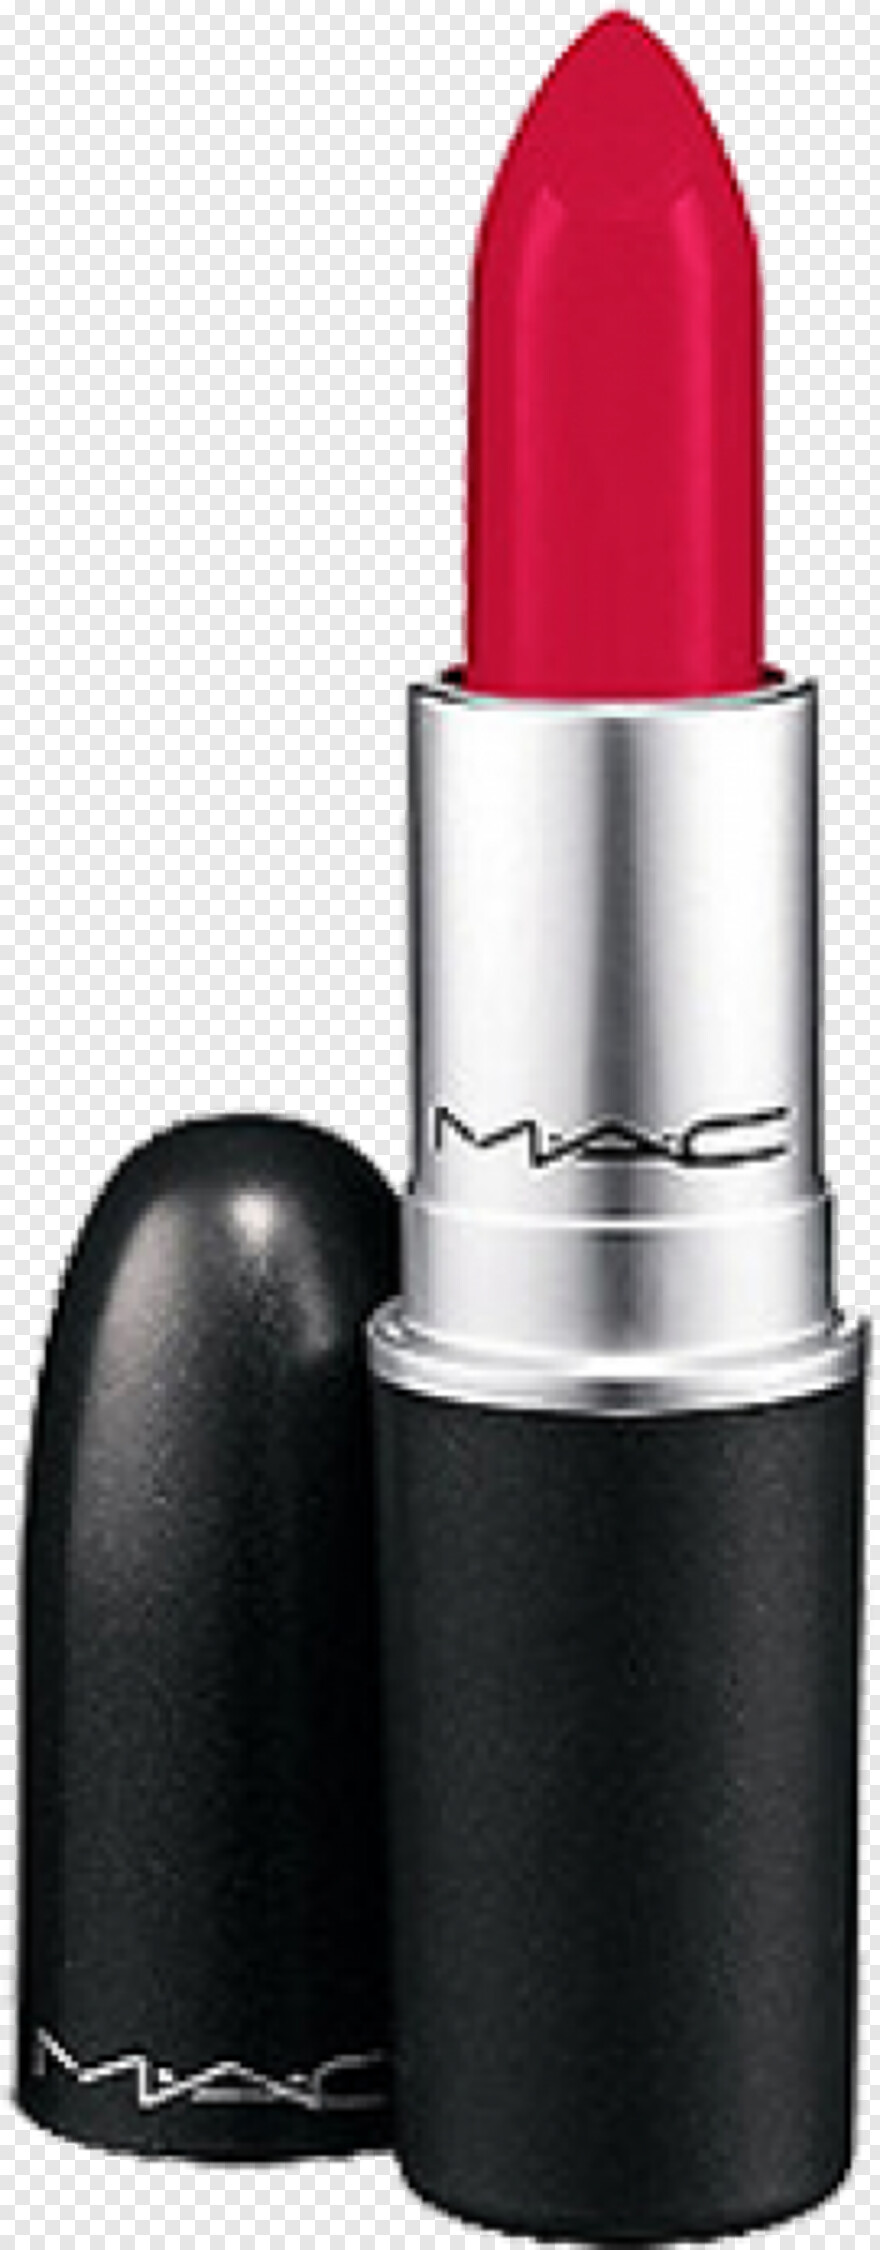 lipstick-mark # 409456